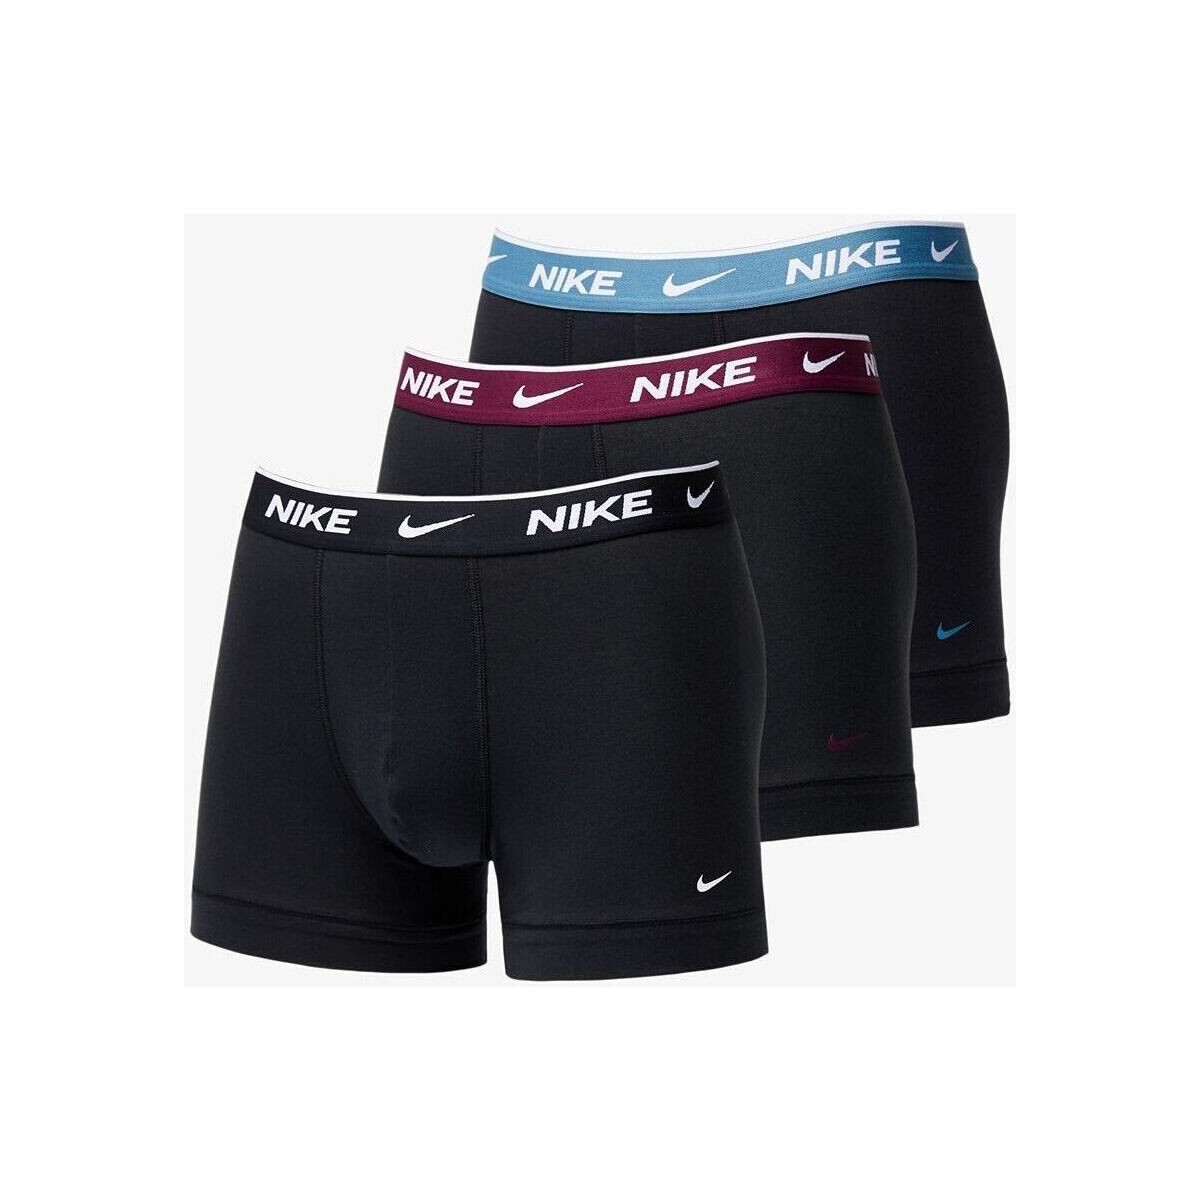 Fehérnemű Férfi Boxerek Nike - 0000ke1008- Fekete 